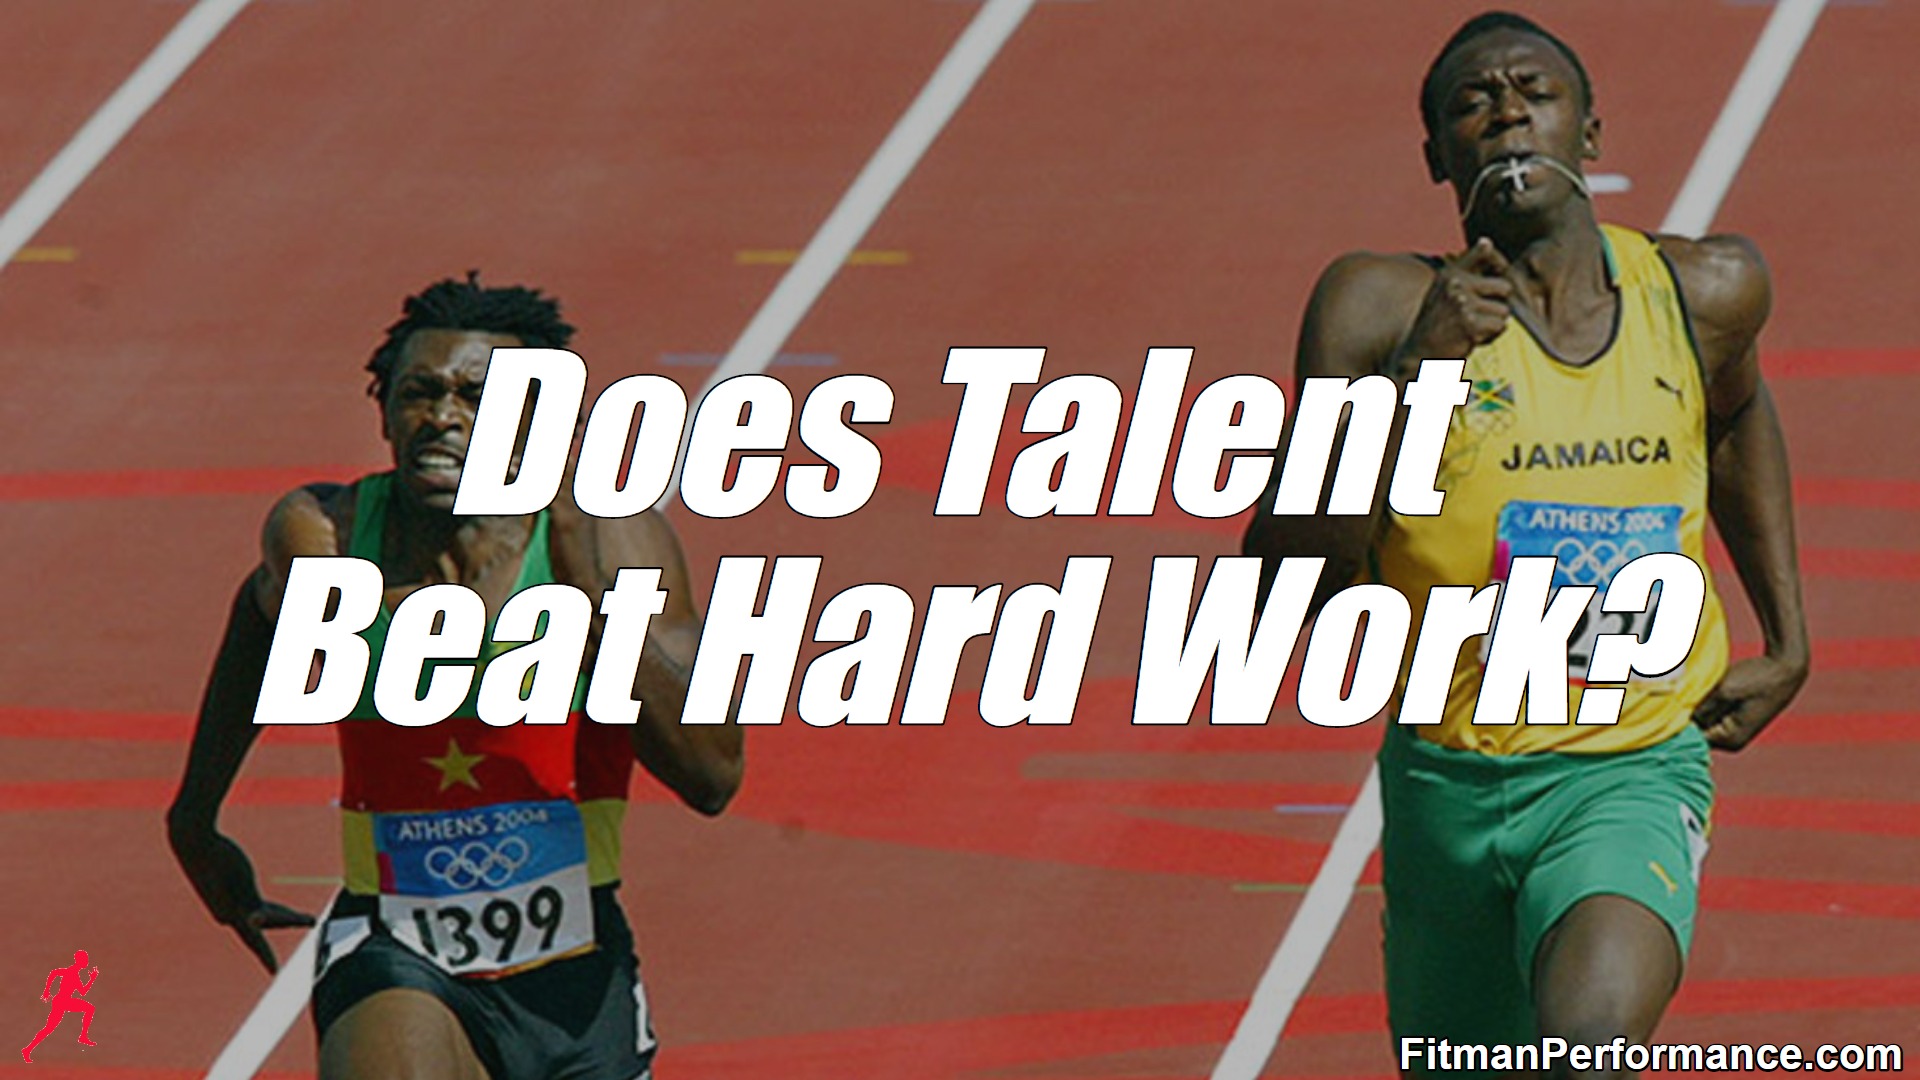 talent beats hard work